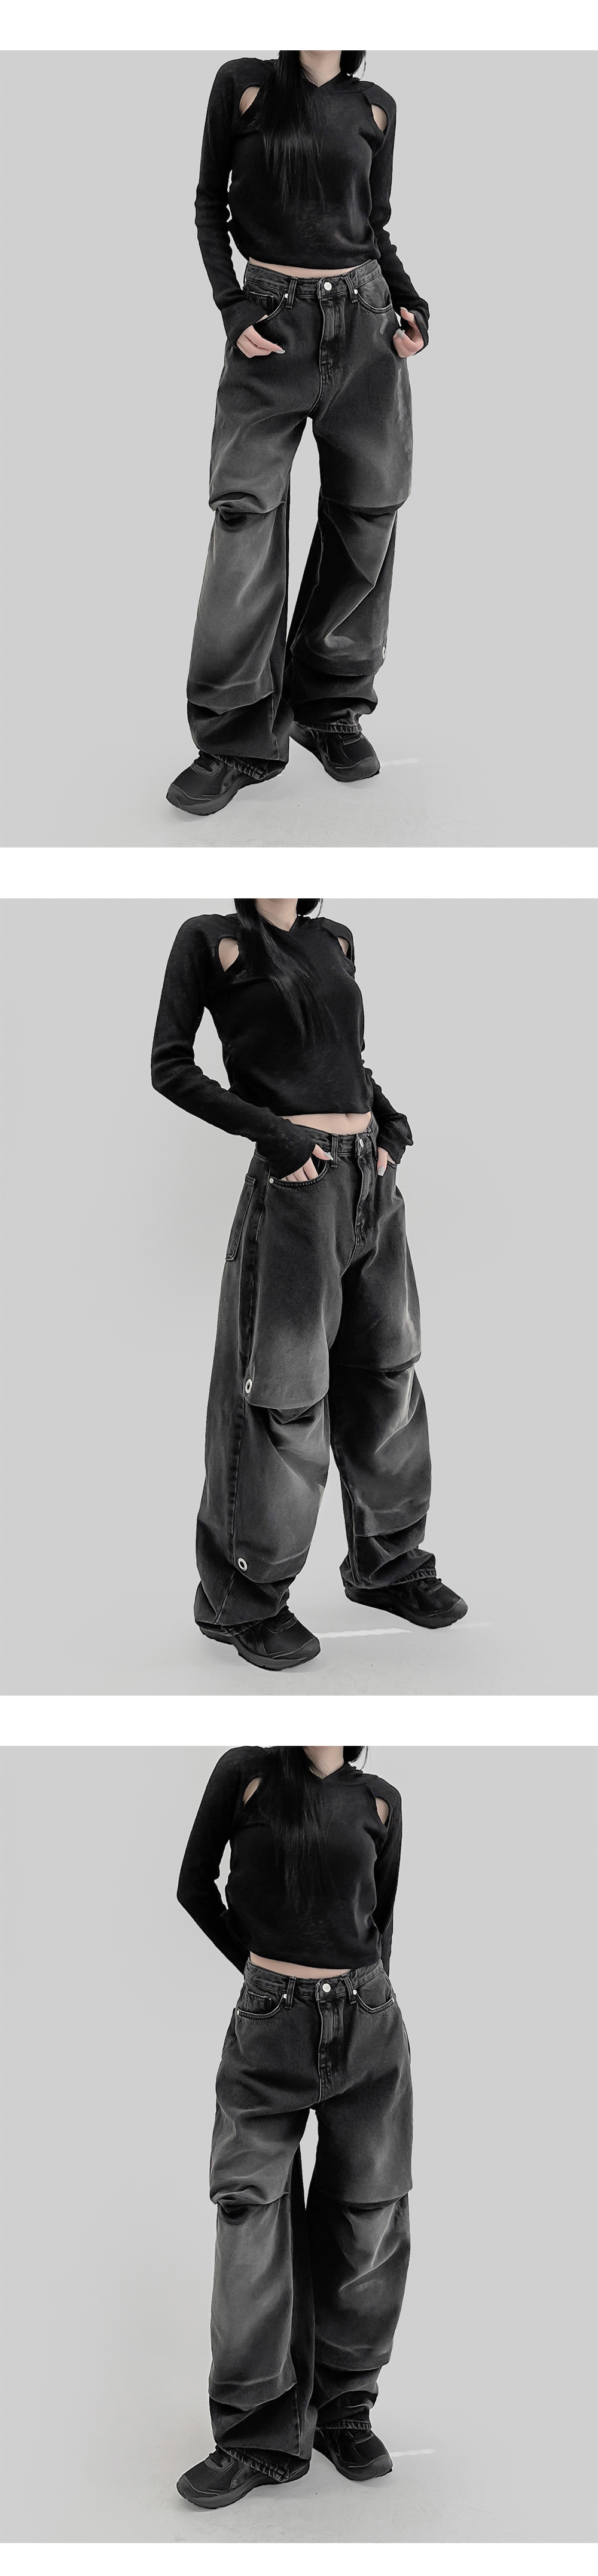 suspenders skirt/pants charcoal color image-S1L4